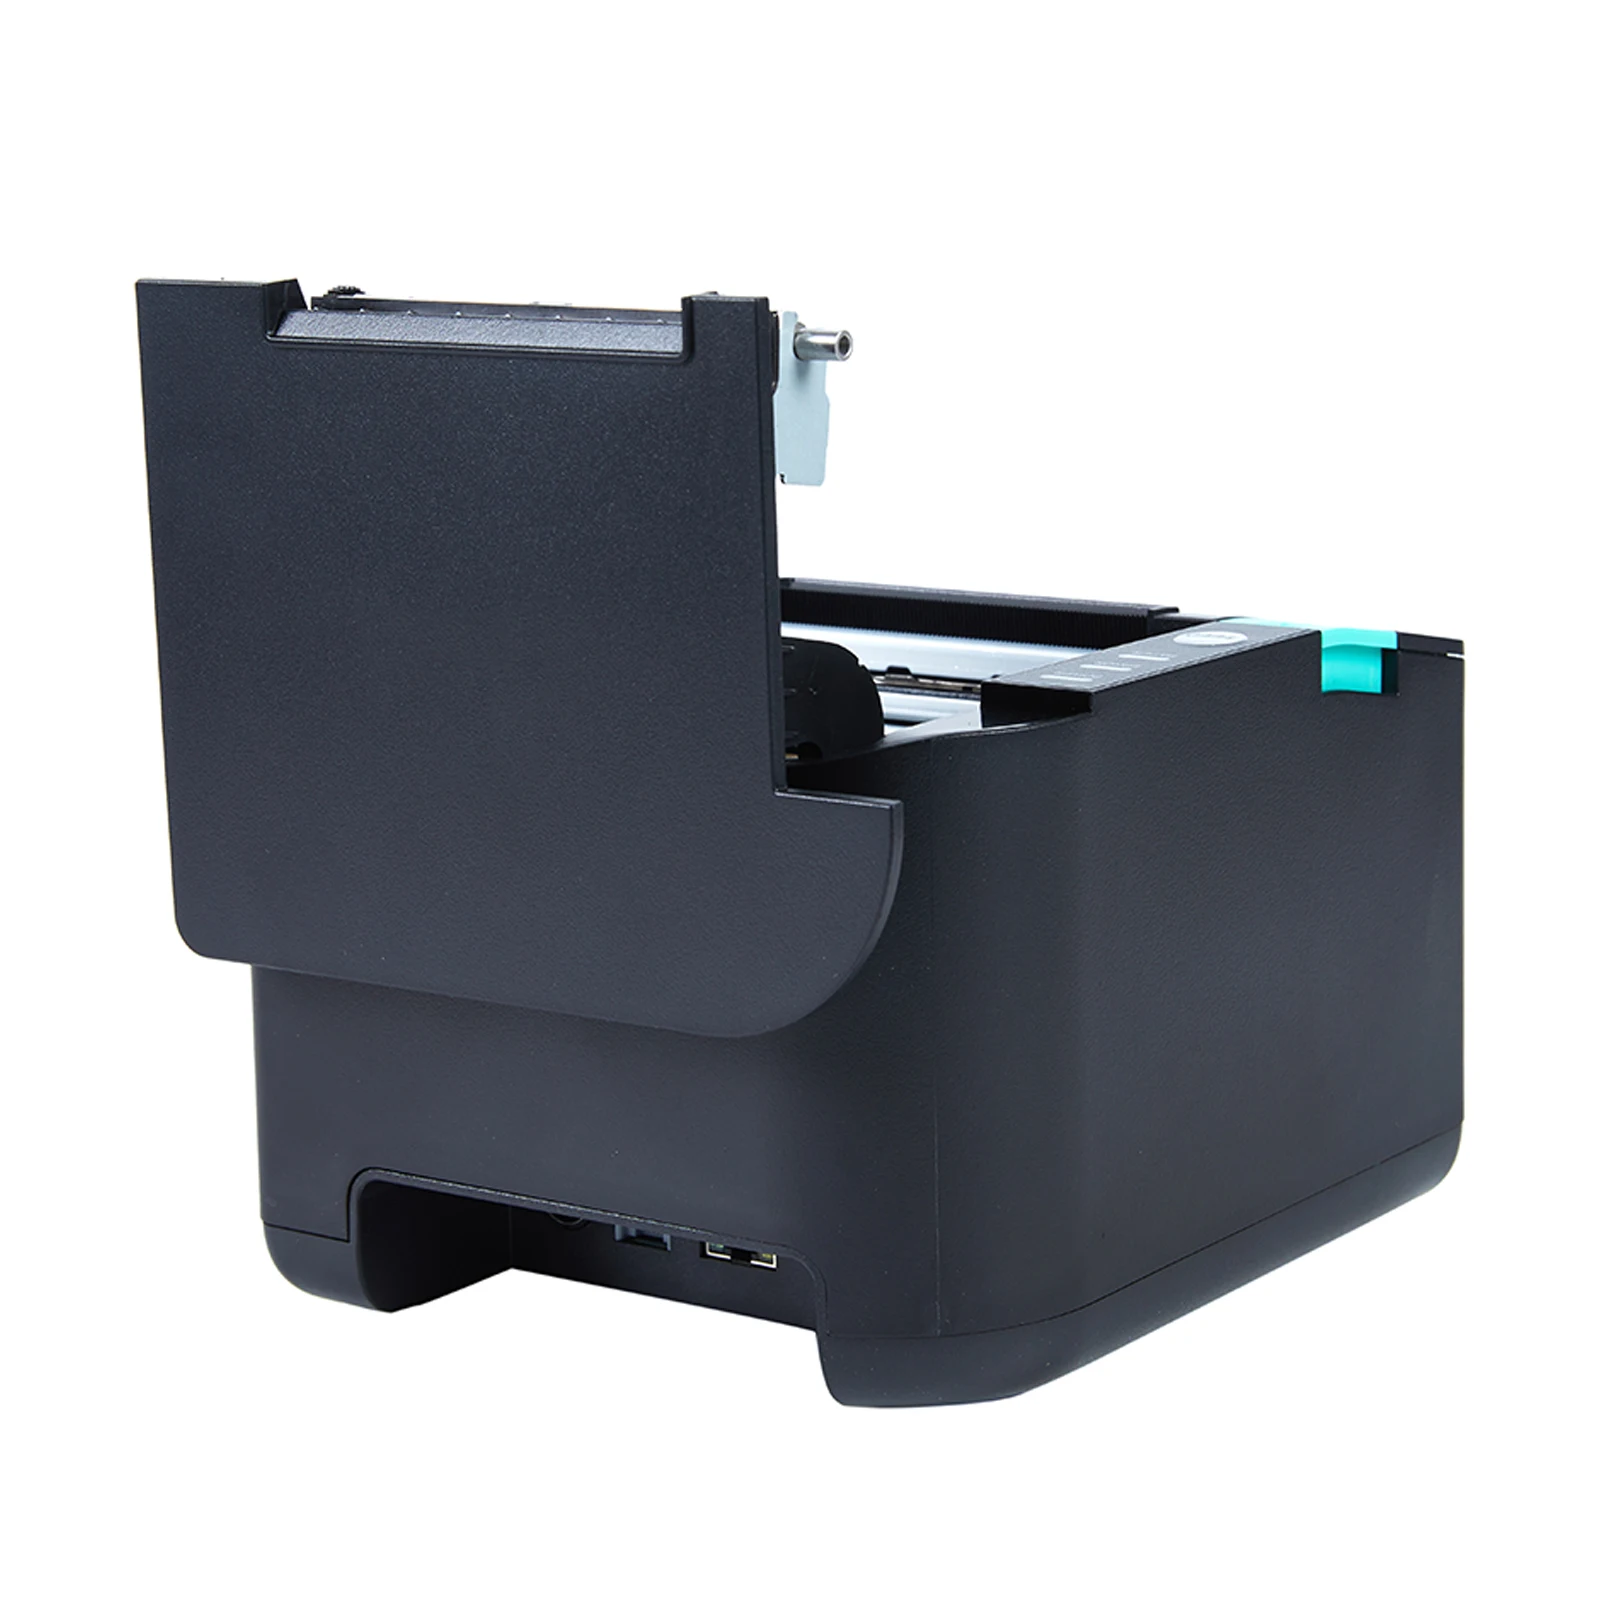 Receipt printer SPRT R301 80mm with auto cutter